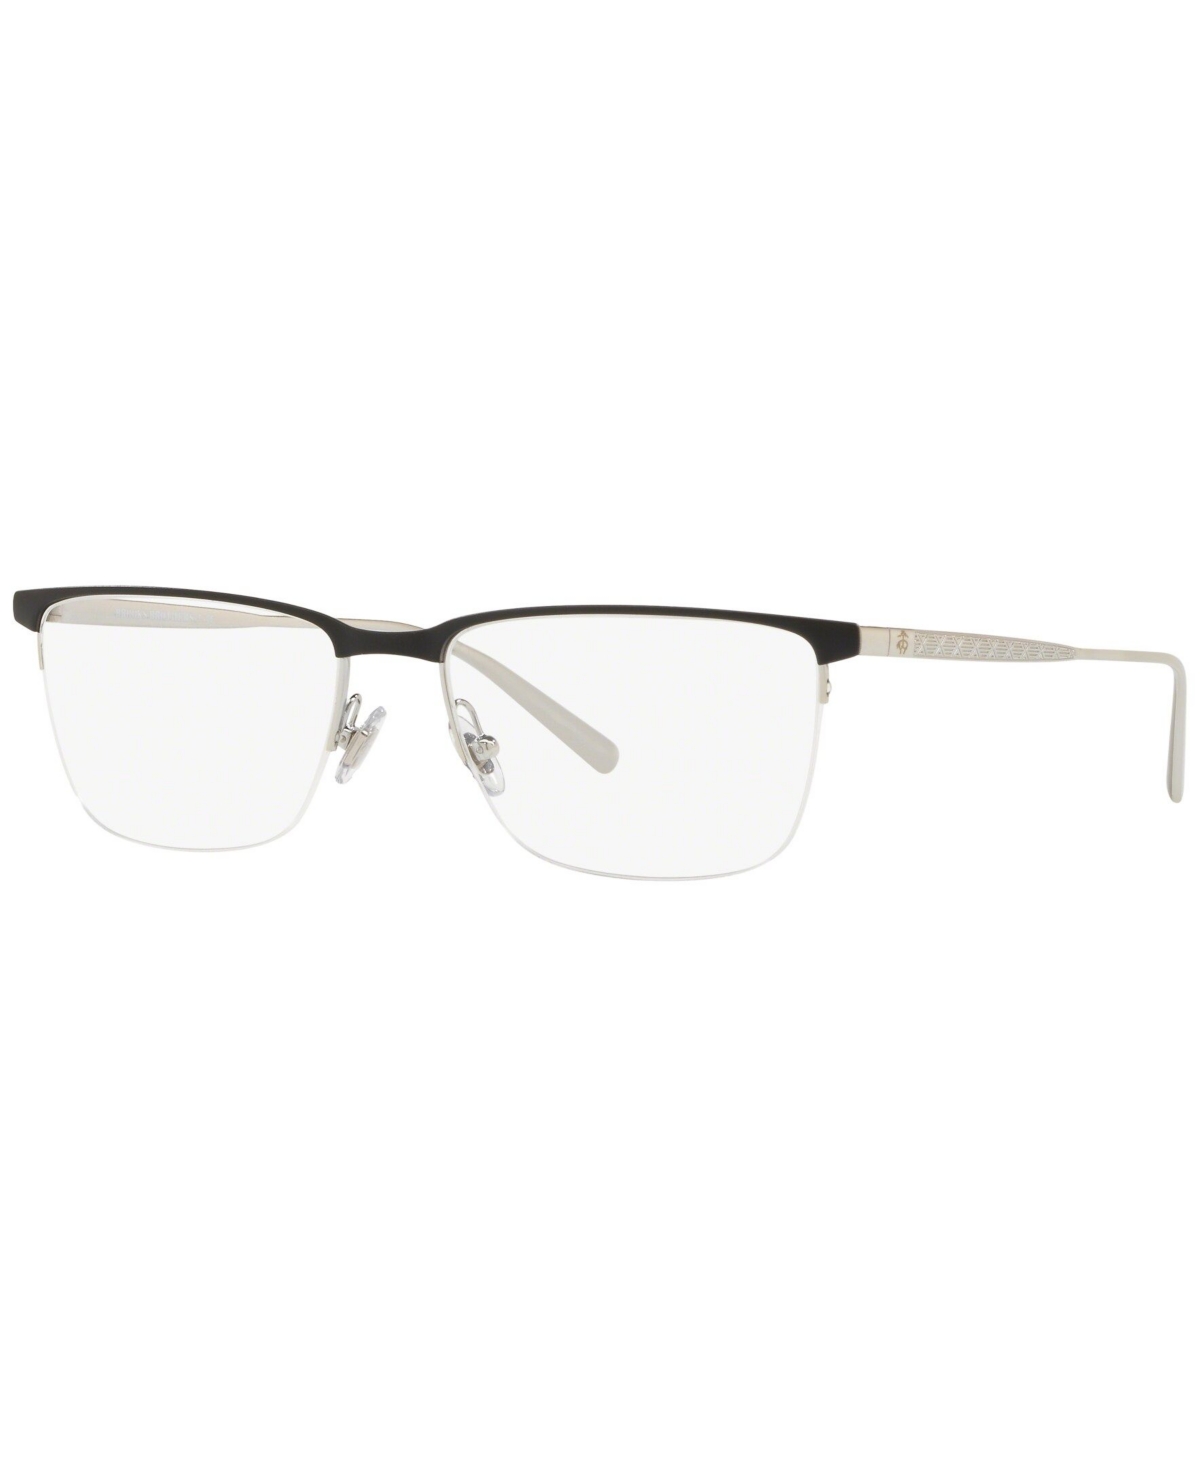 BB1061 Men's Rectangle Eyeglasses - Shiny Silv